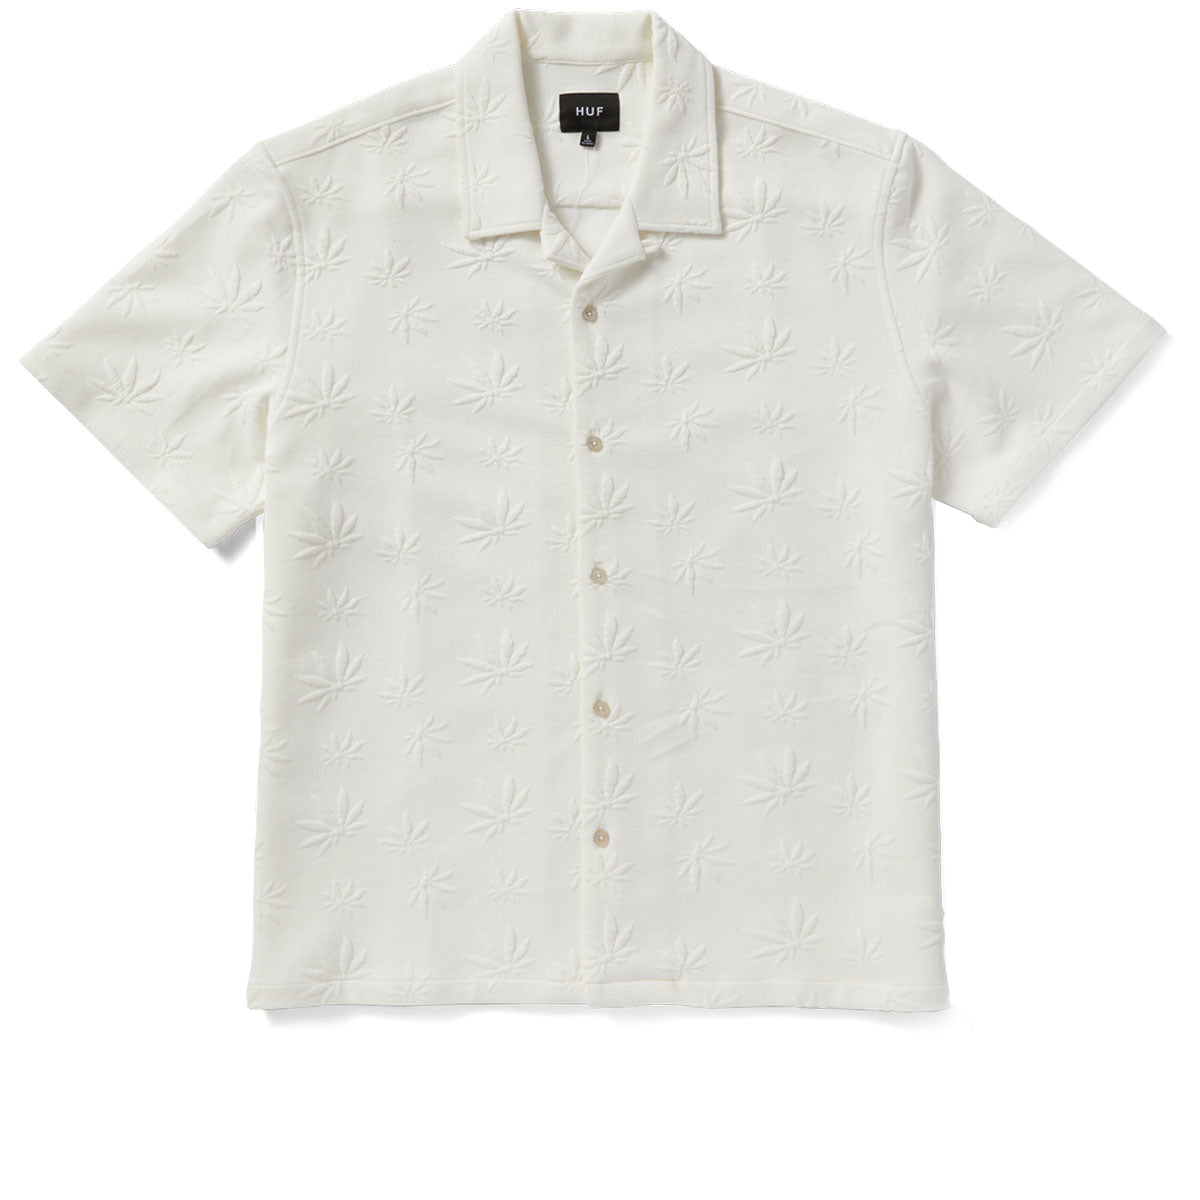 HUF Plantlife Jacquard Shirt - White image 1